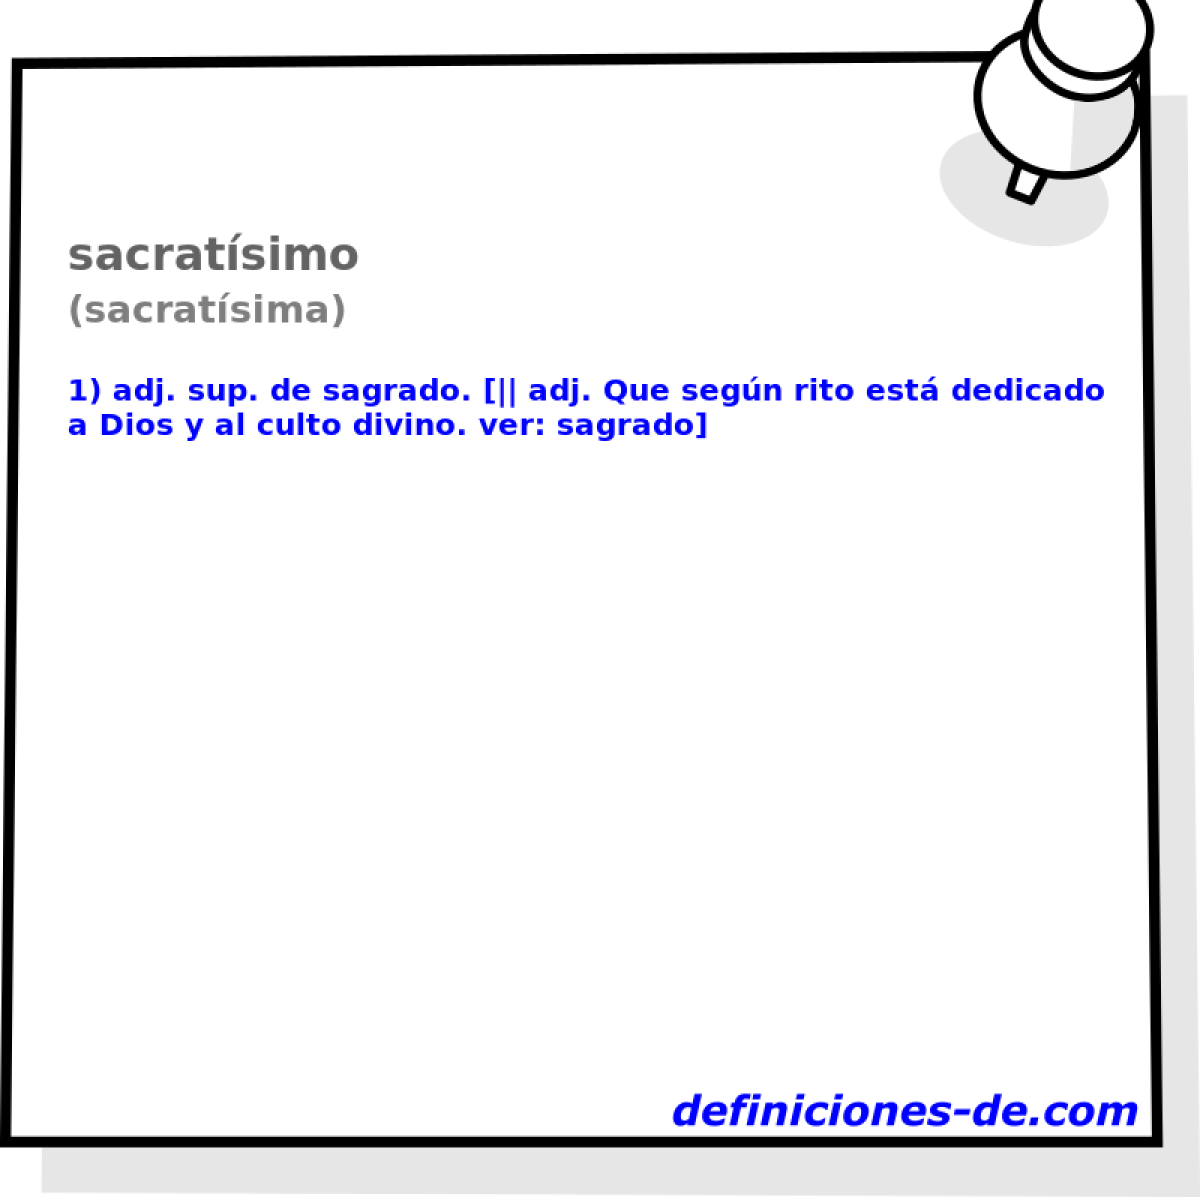 sacratsimo (sacratsima)